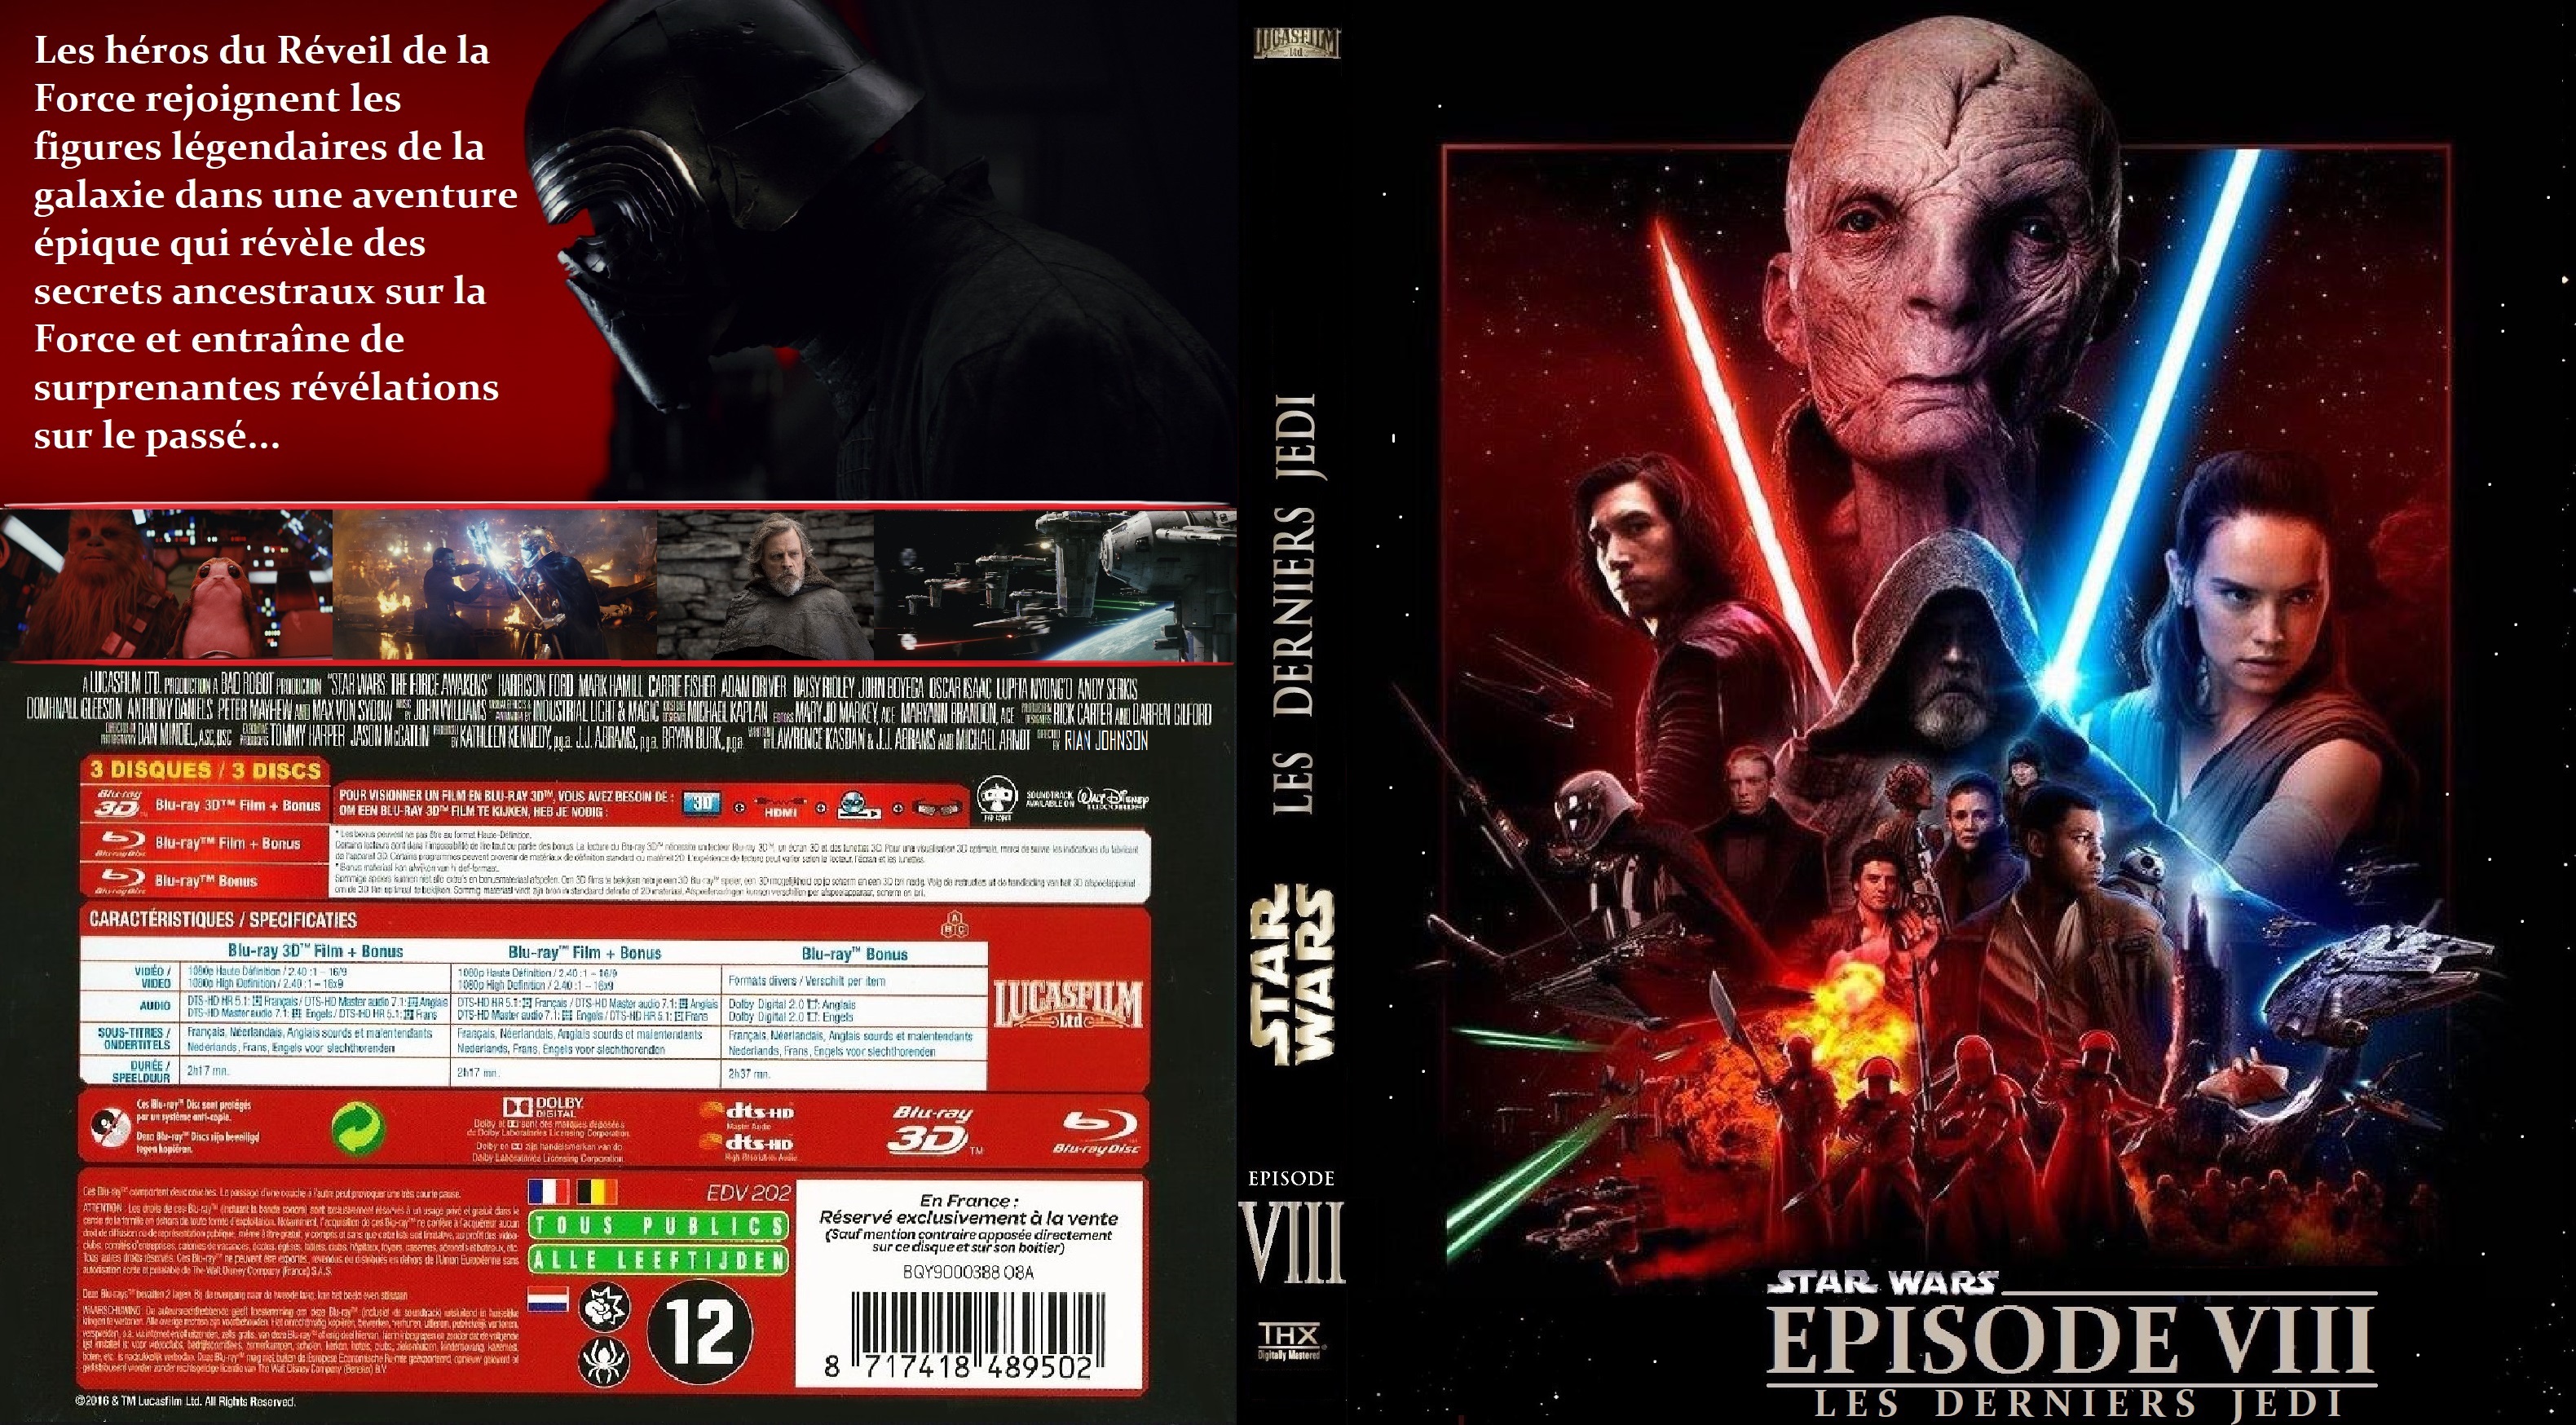 Jaquette DVD Star Wars Episode VIII Les Derniers Jedi custom (BLU-RAY)